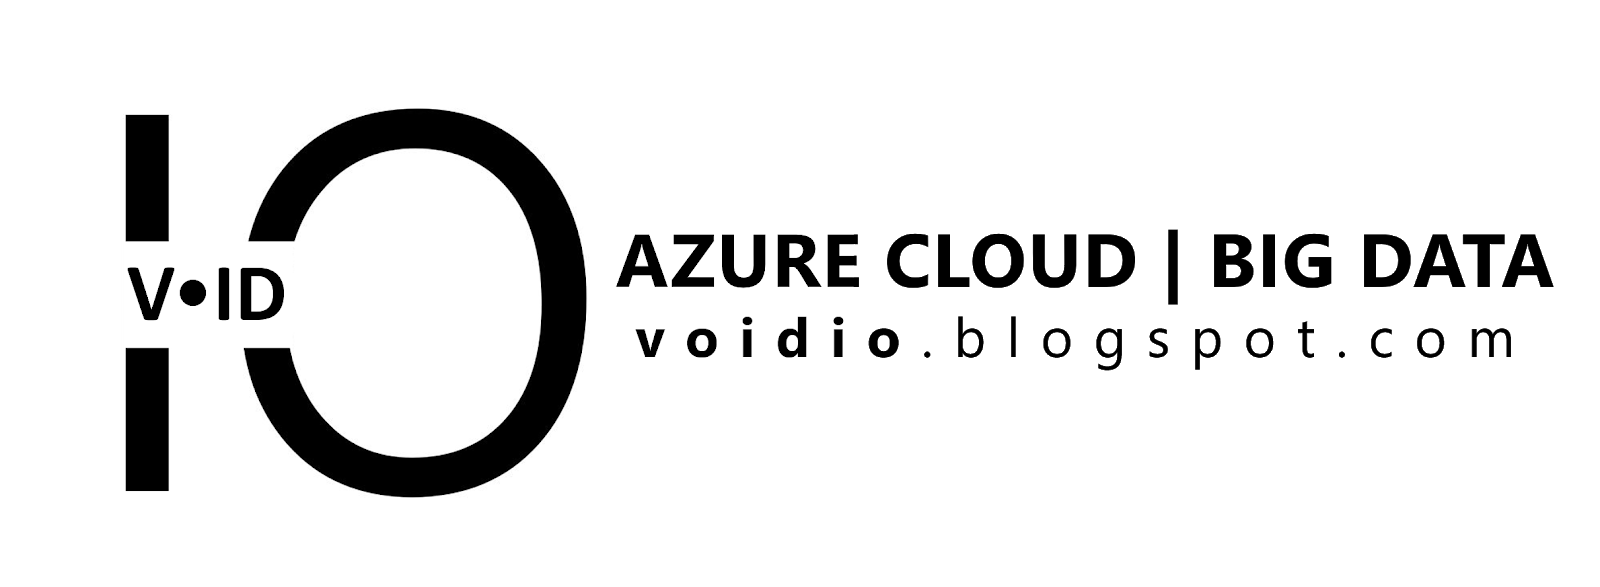 Microsoft Azure Cloud | Big Data | Hadoop